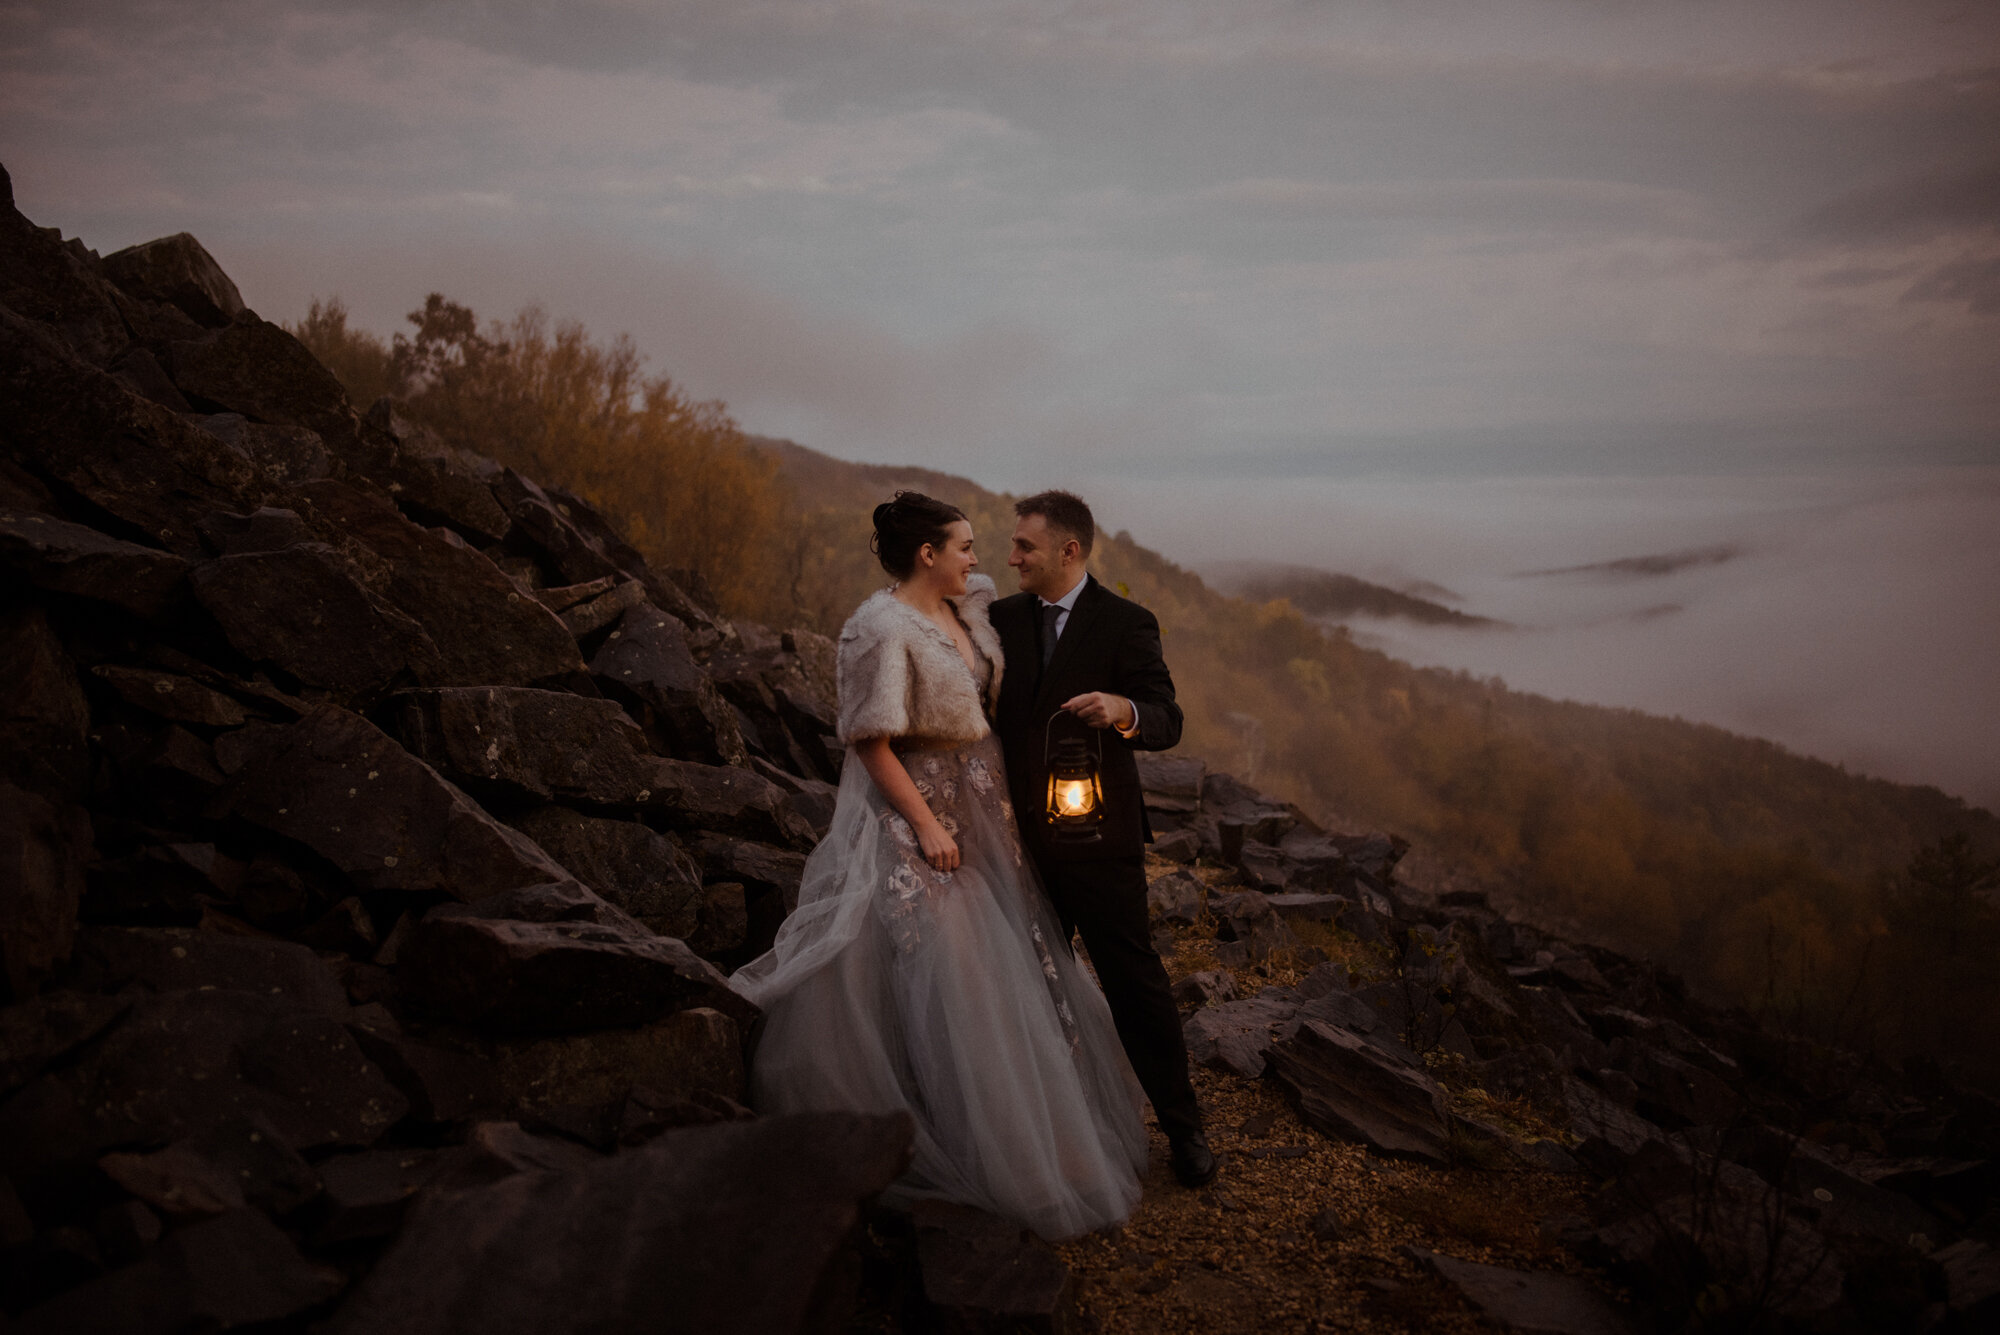 Wedding Ceremony in Shenandoah National Park - Black Rock Hike Elopement - Blue Ridge Parkway Wedding in the Fall - White Sails Creative_1.jpg